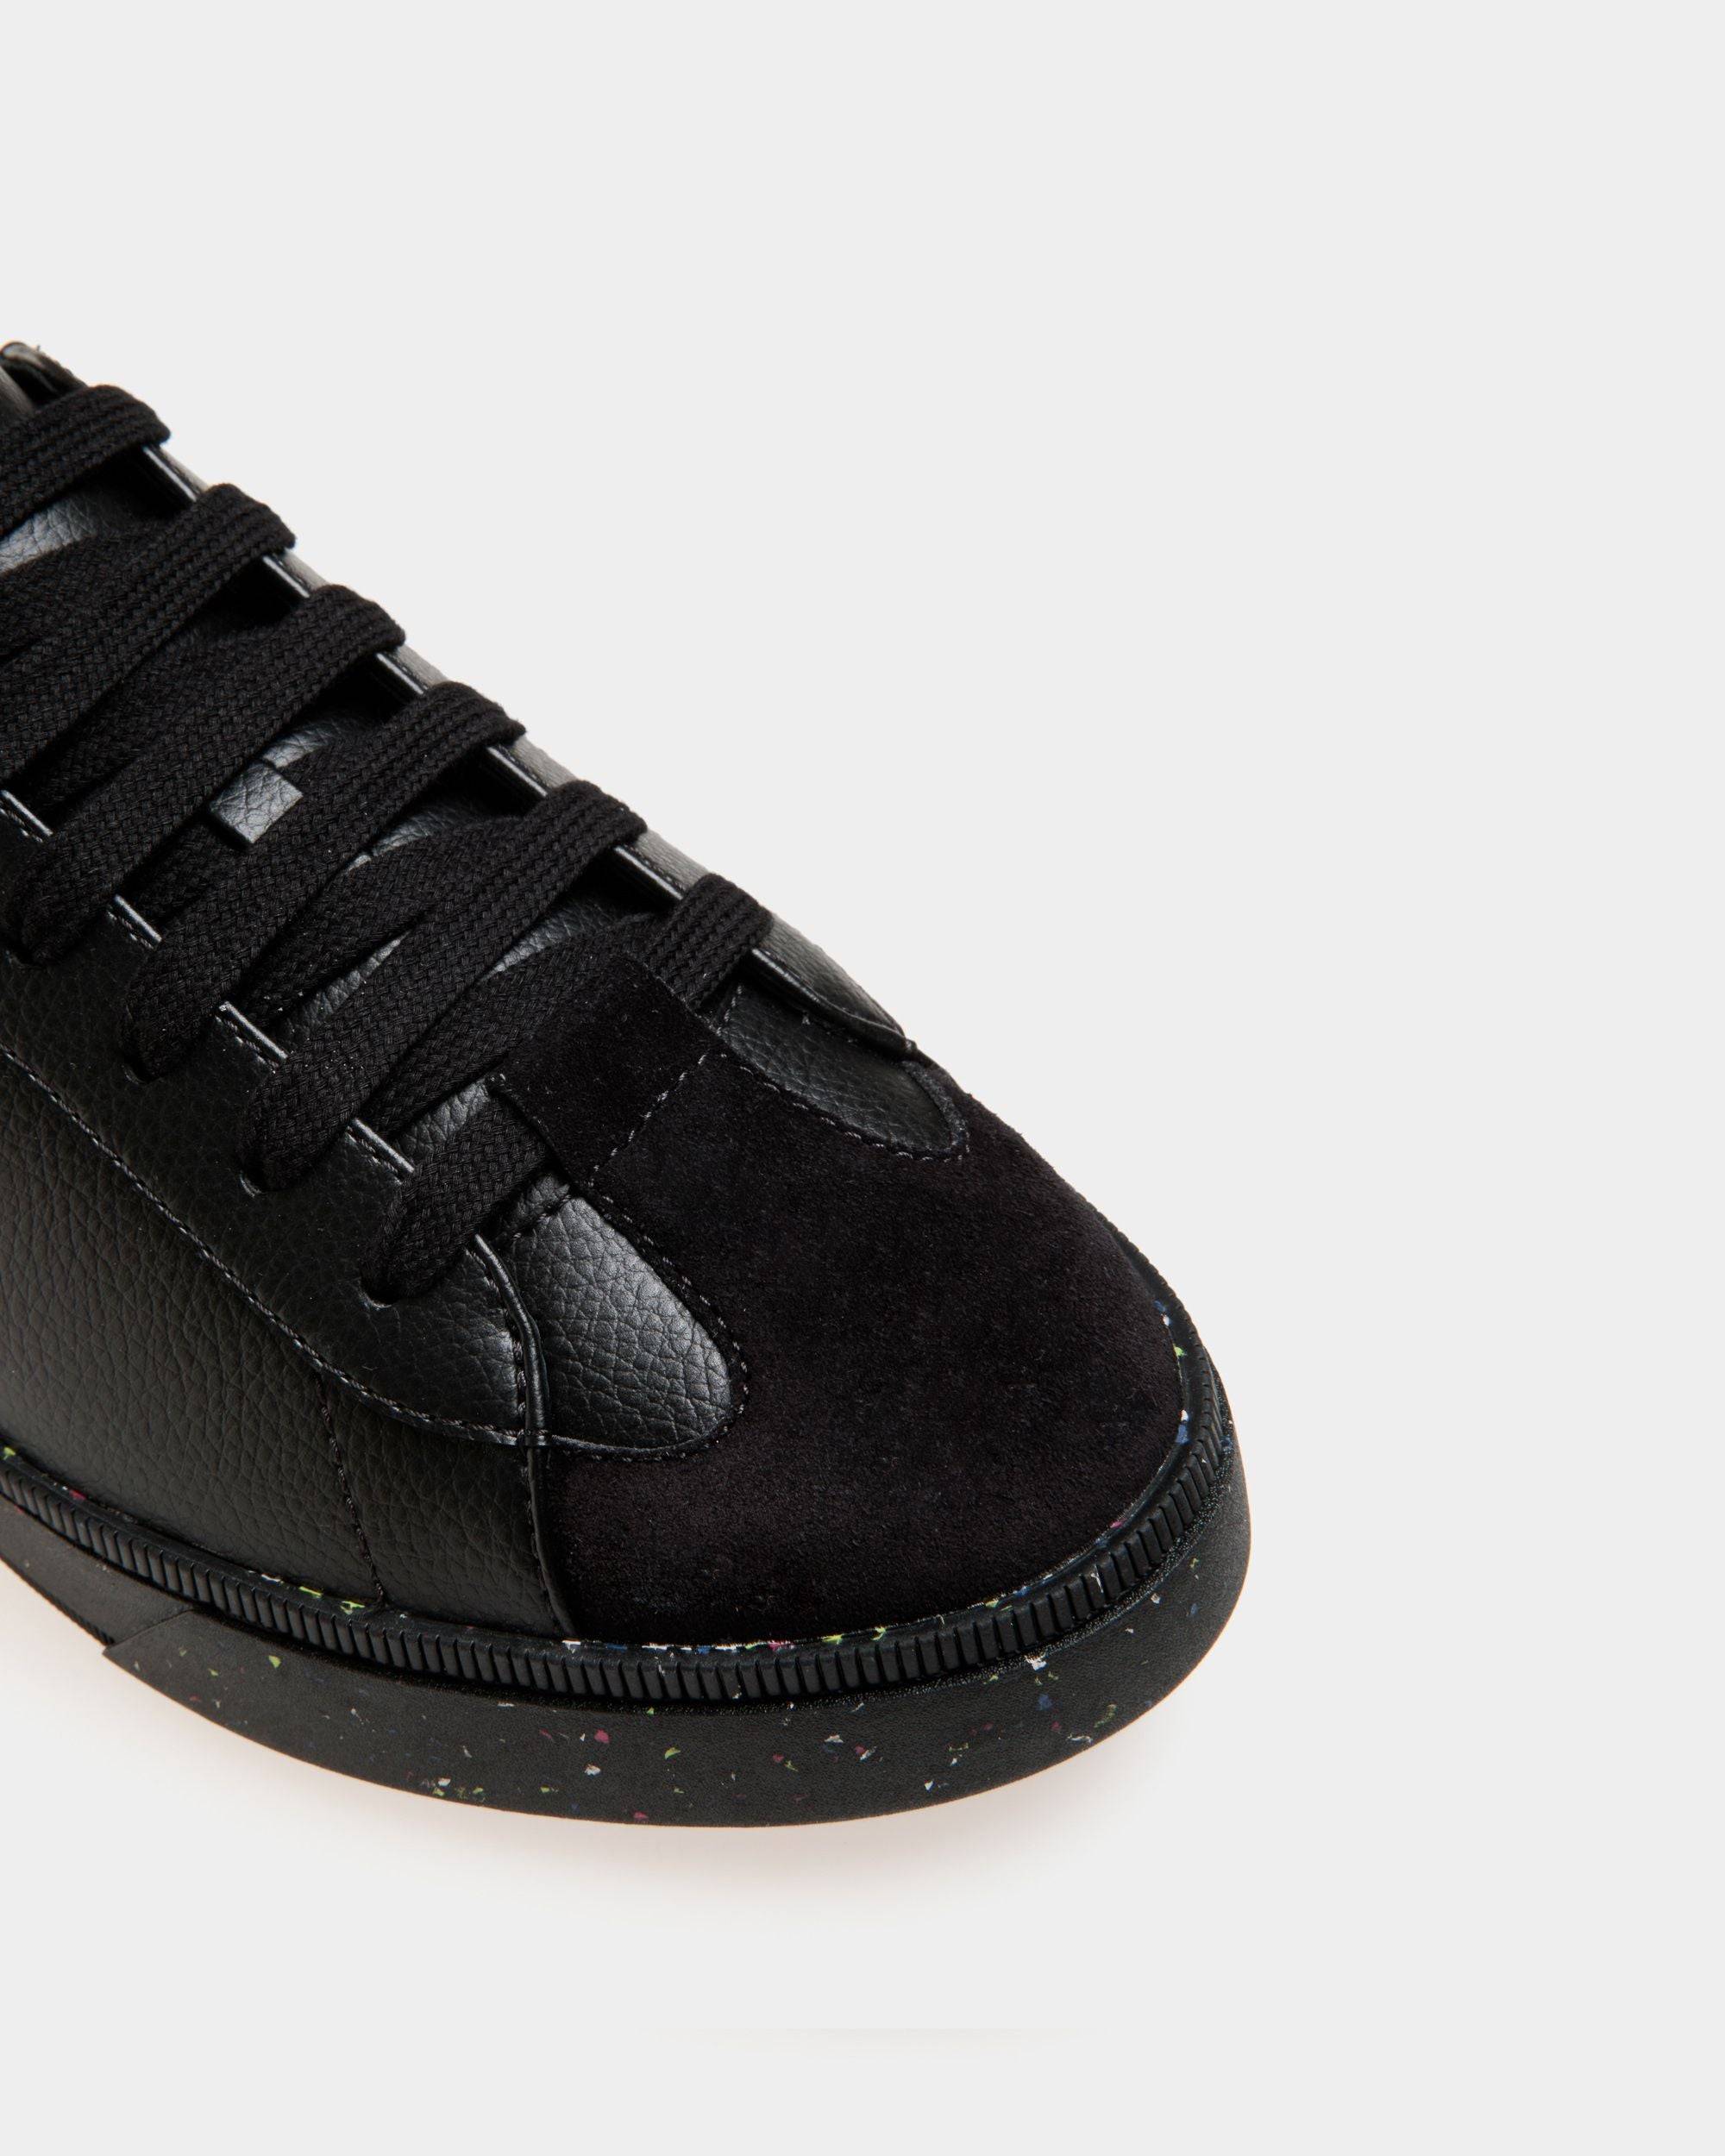 Raise | Men's Sneaker in Black Faux Leather | Bally | Still Life Detail